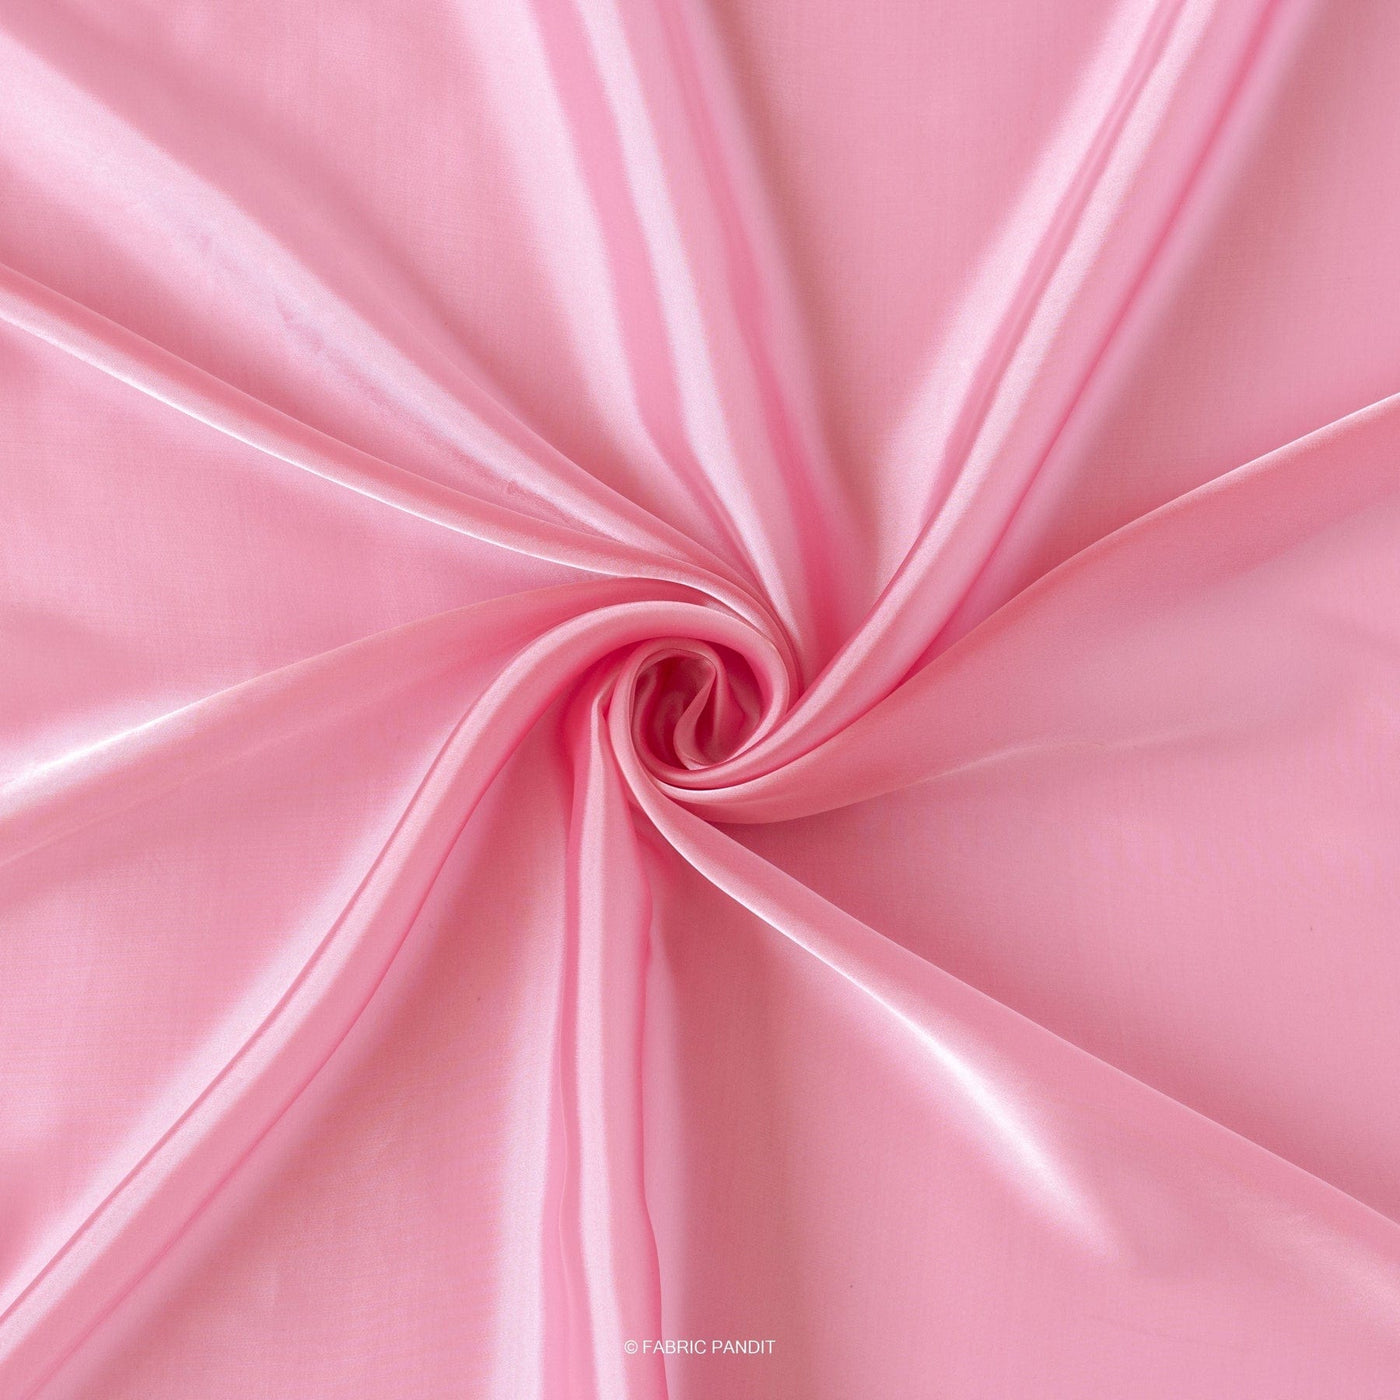 Fabric Pandit Fabric Rouge Pink Plain Premium Organza Fabric (Width 44 Inches)